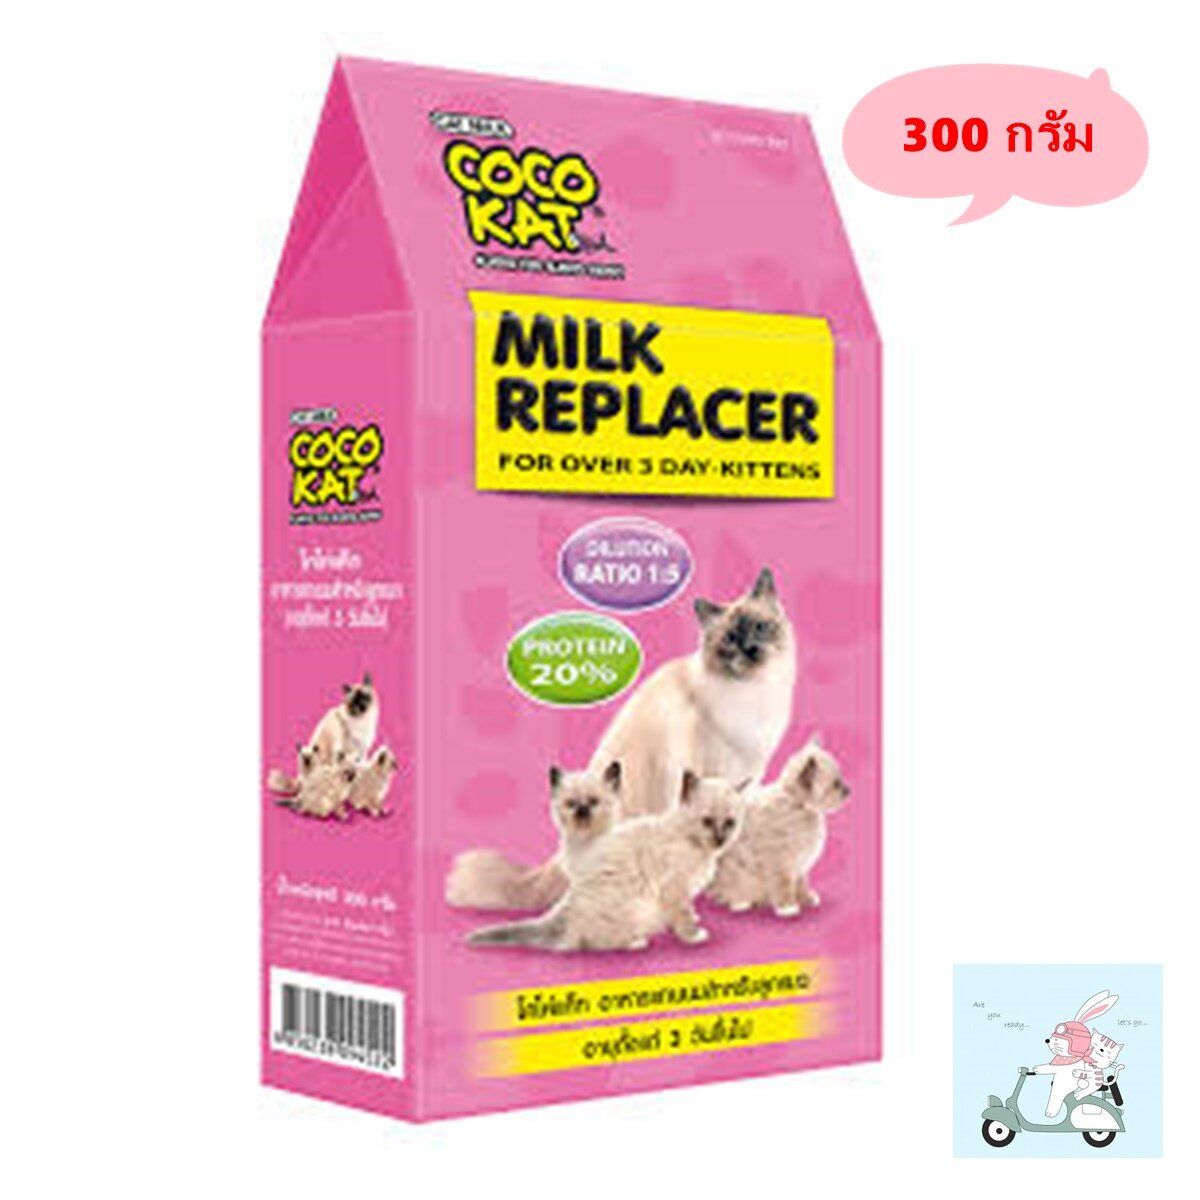 Cocokat milk replacer 150g นมผง นมผงลูกแมว แบบชง ขนาด 300 กรัม